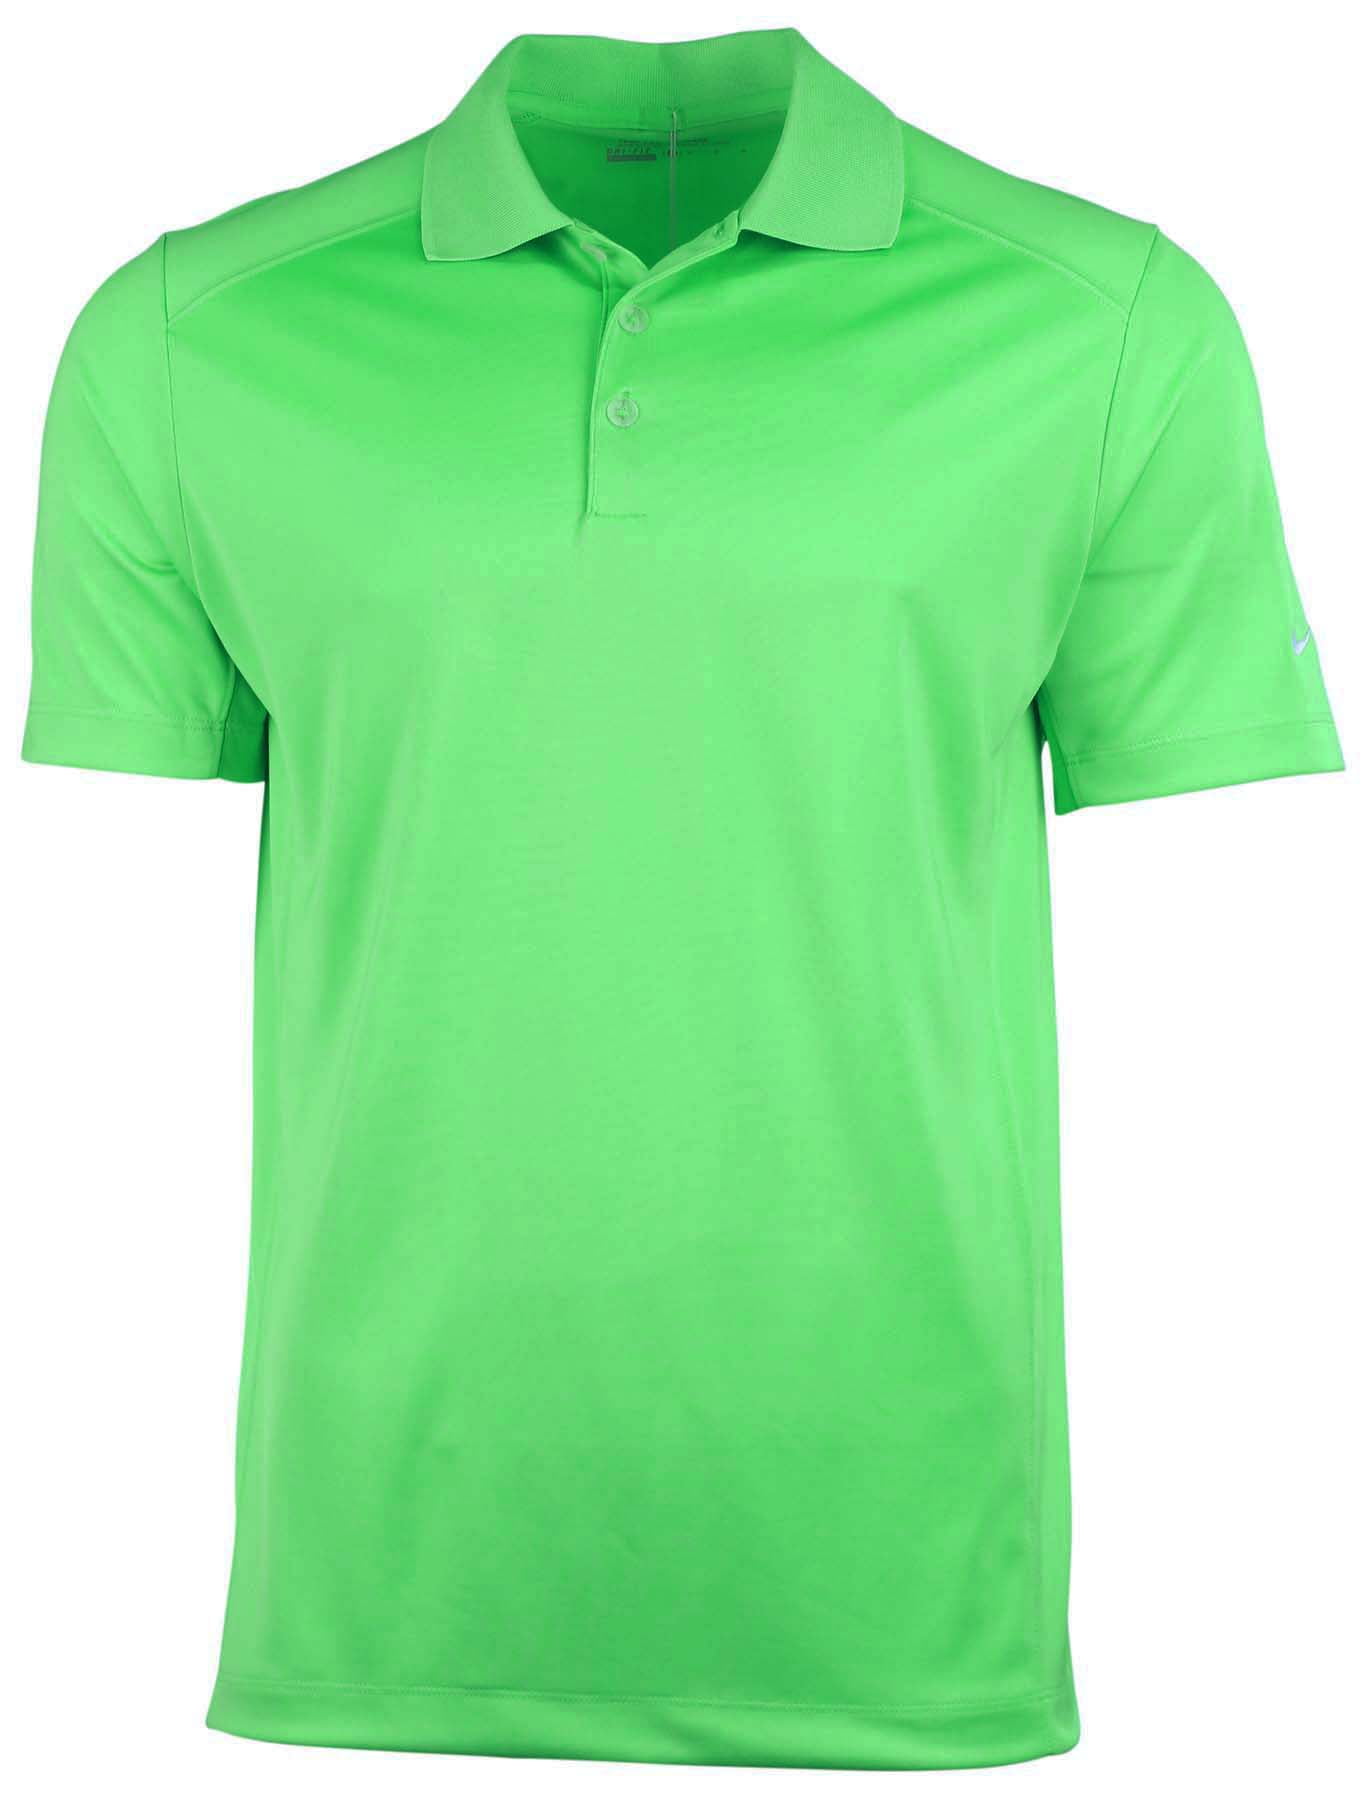 Nike Men's Dri-Fit Victory Golf Polo Shirt - Walmart.com